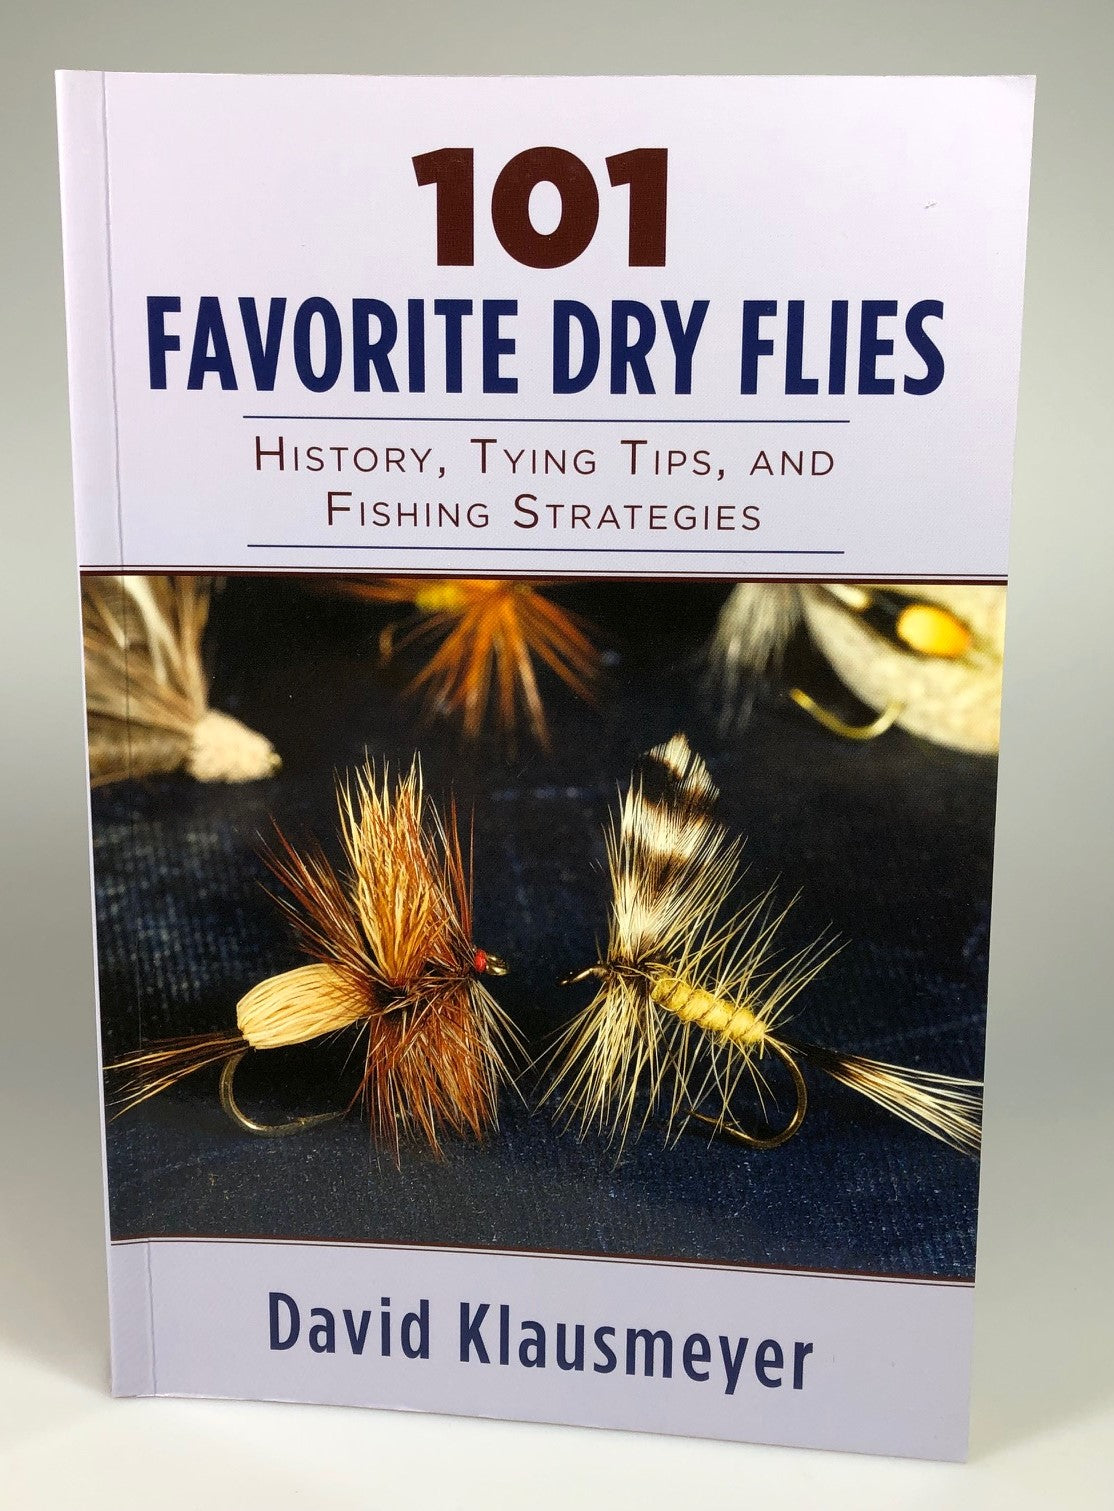 101 Favorite Dry Flies by David Klausmeyer